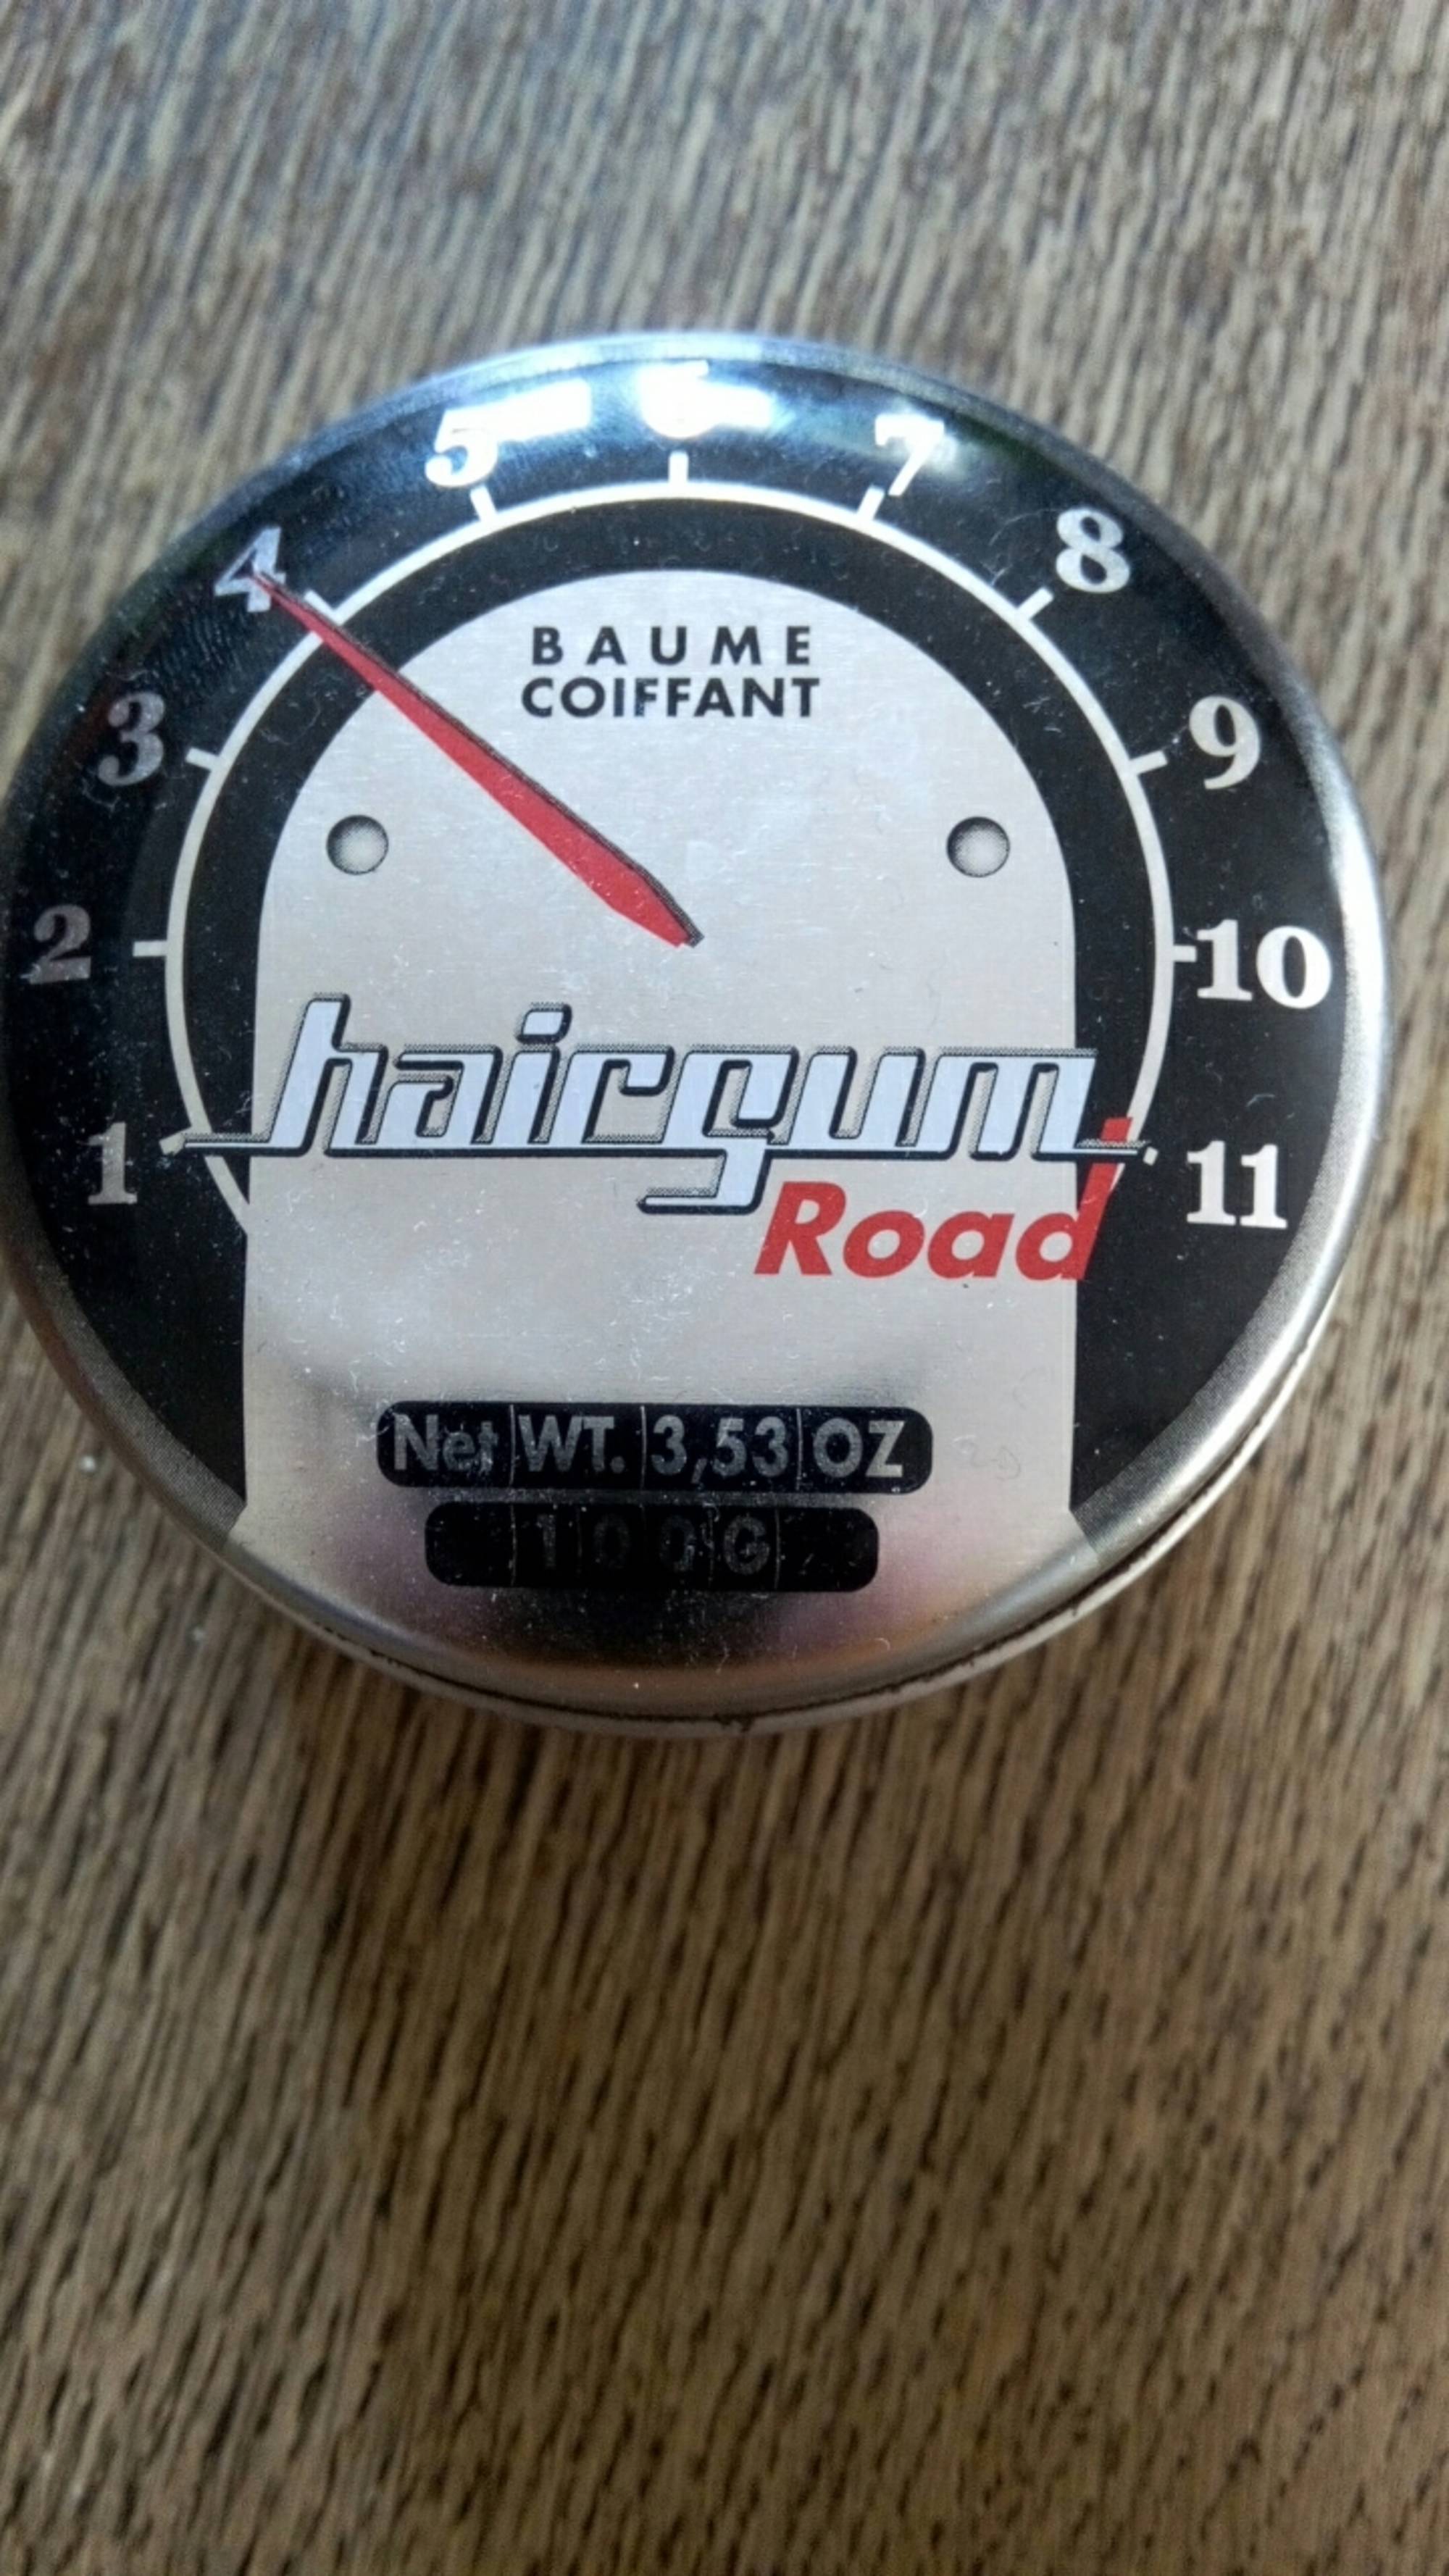 HAIRGUM - Road - Baume coiffant vanille